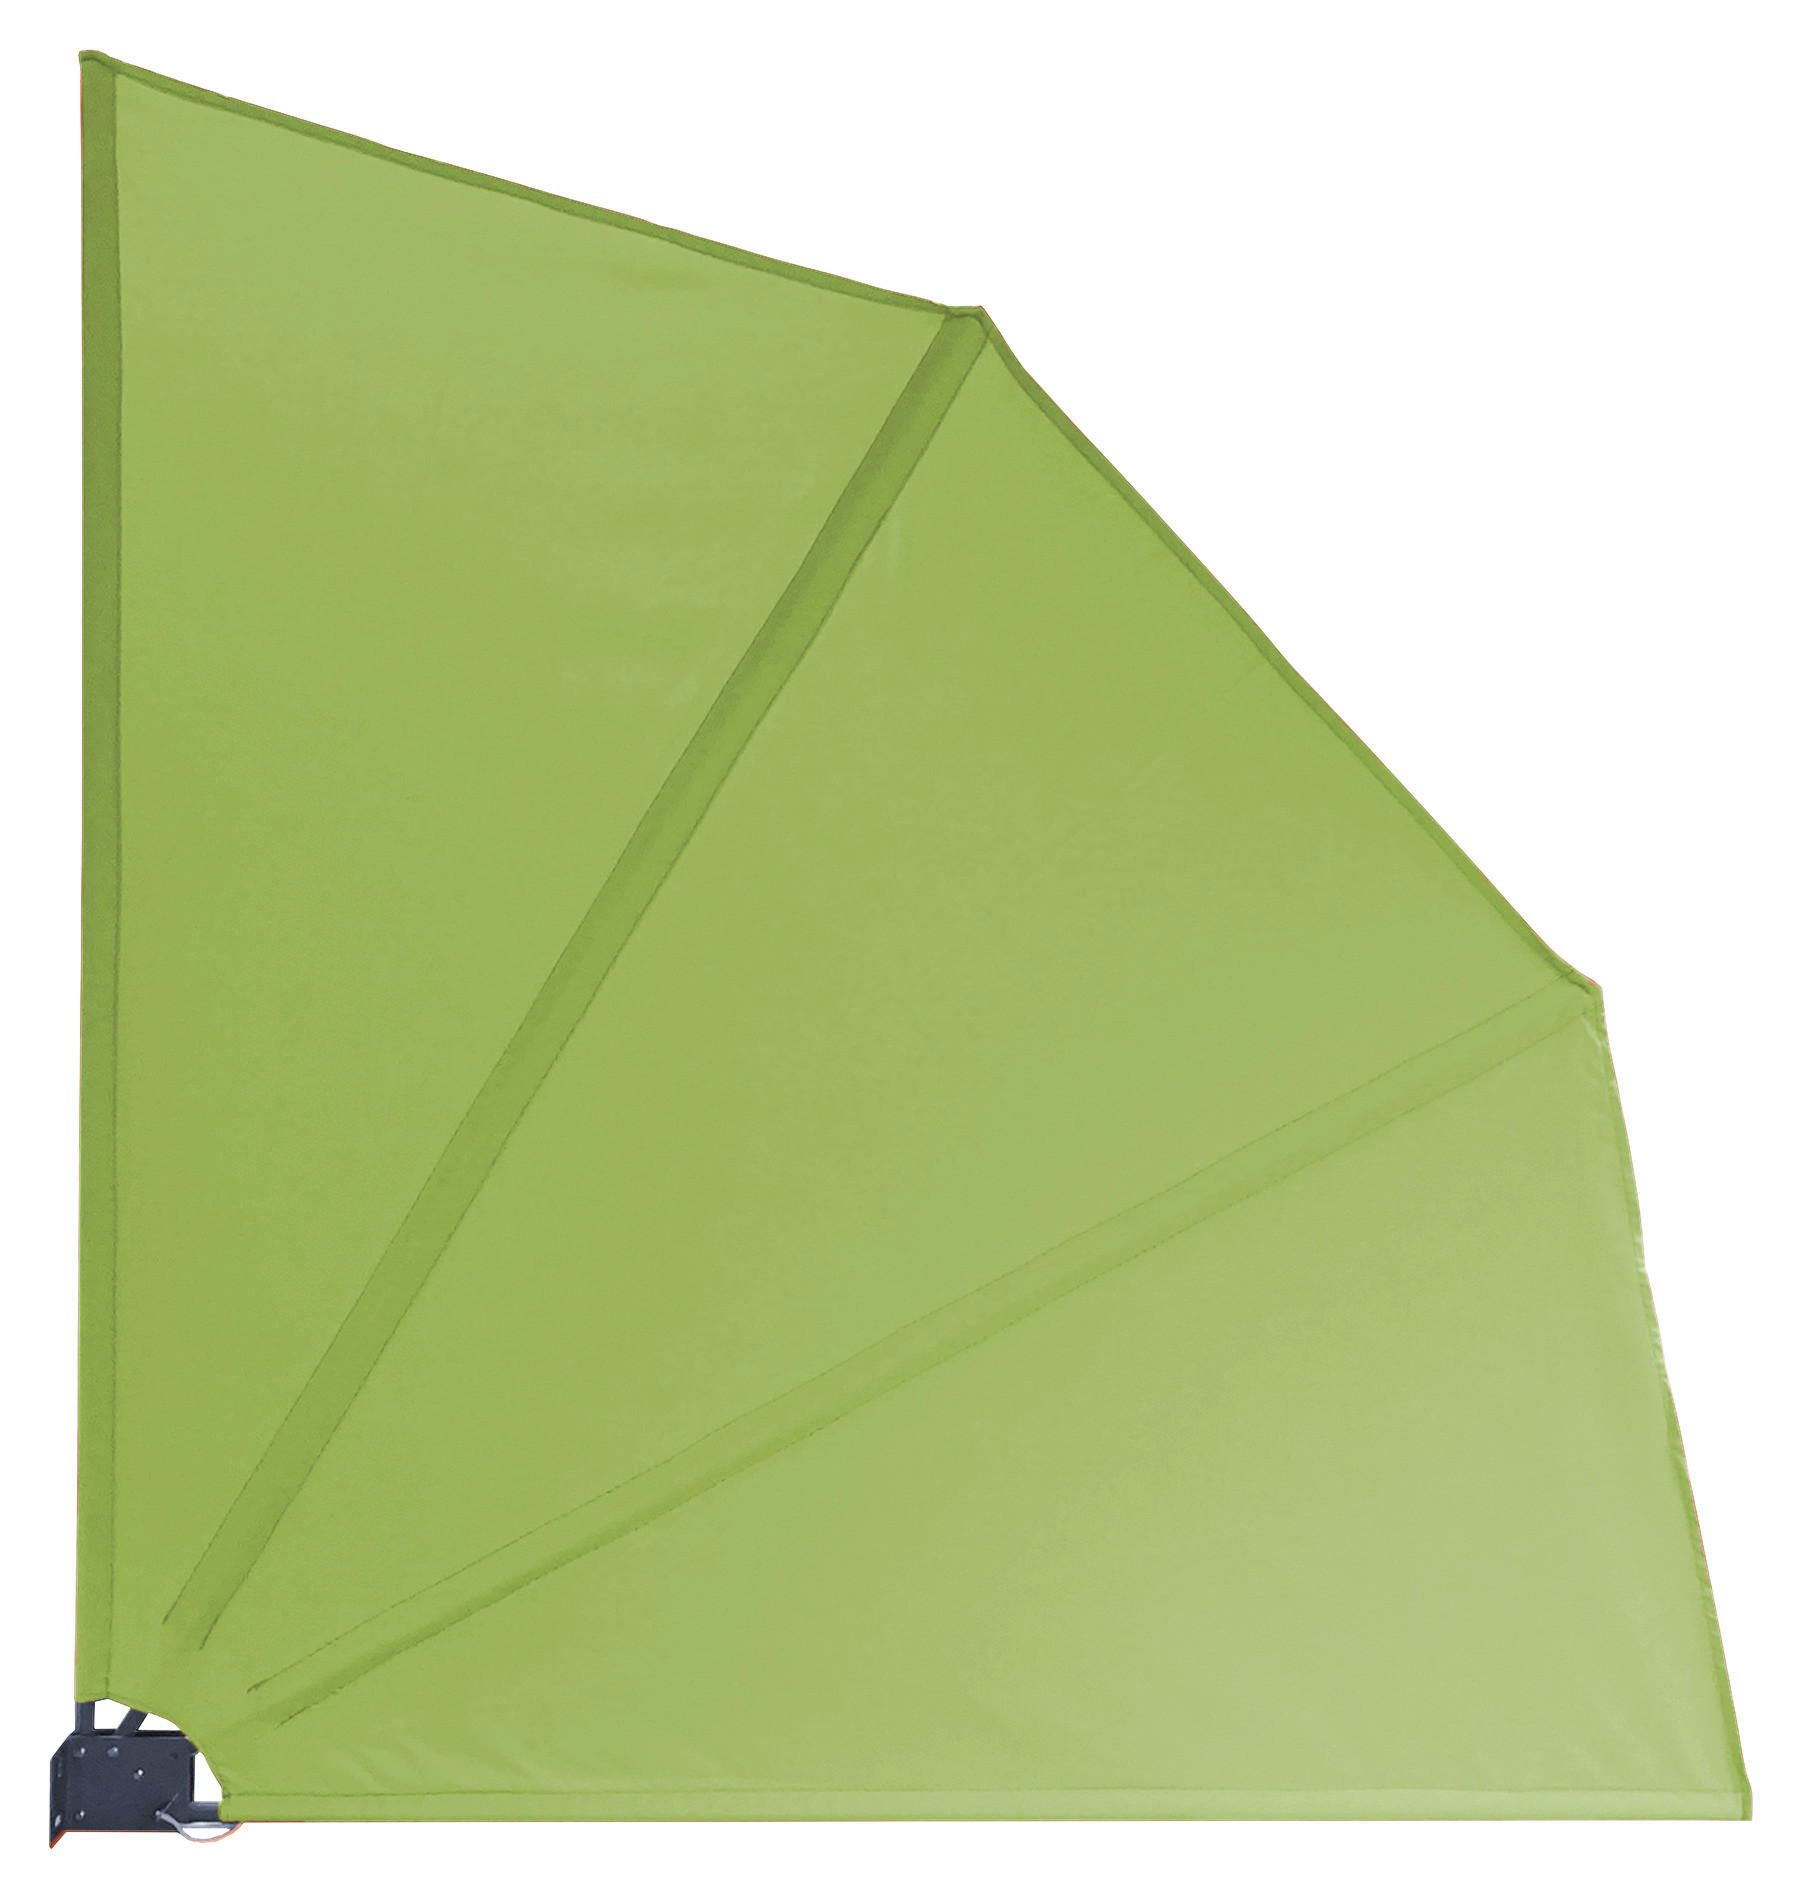 Grasekamp Balkonfächer apfelgrün Polyester-Mischgewebe B/L: ca. 120x120 cm Balkonfächer_120x120cm - apfelgrün (120,00/120,00cm)